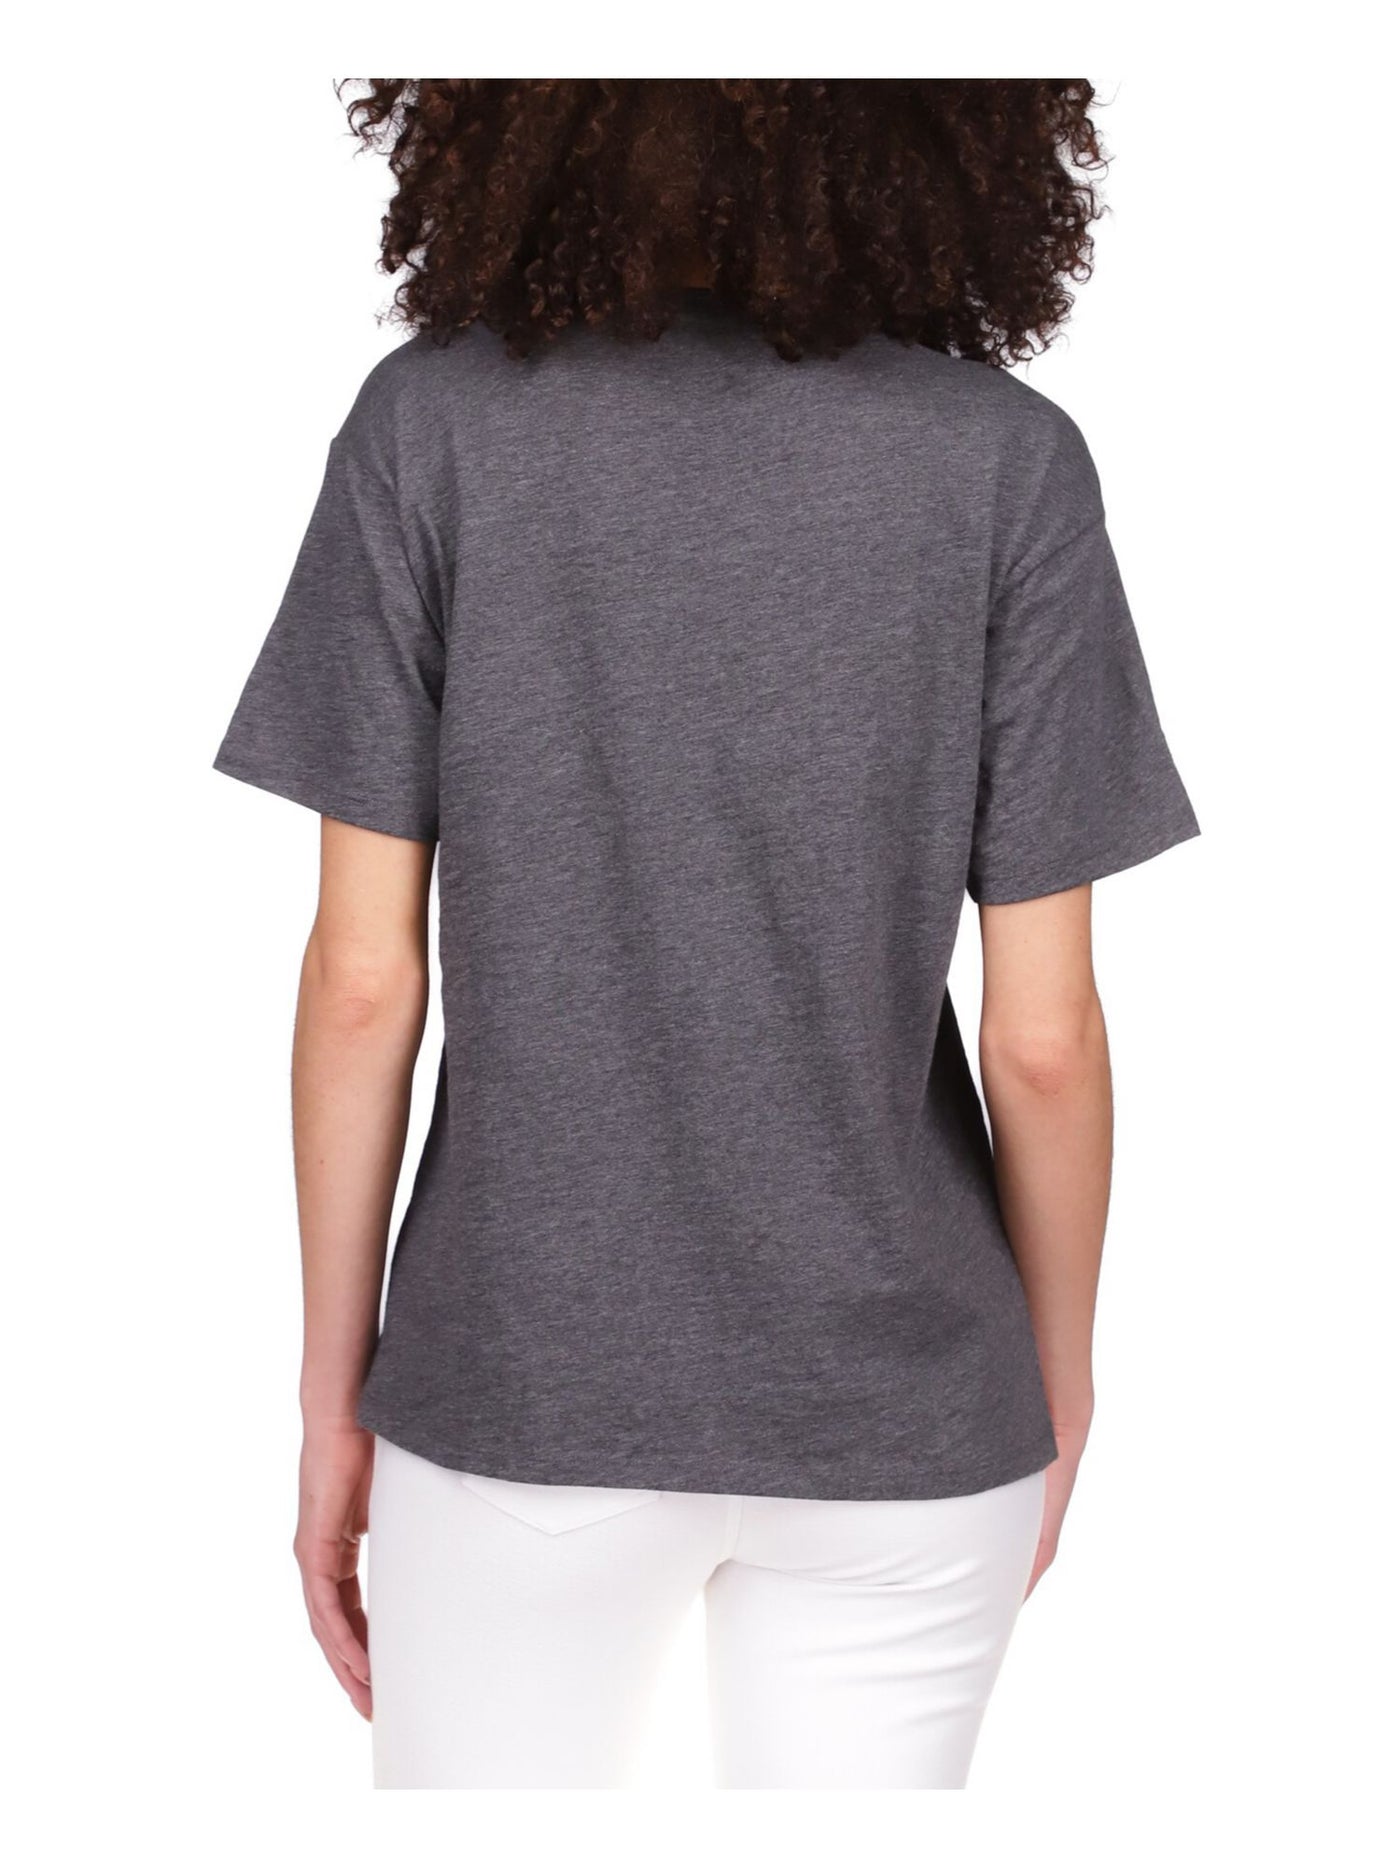 MICHAEL MICHAEL KORS Womens Gray Heather Short Sleeve Scoop Neck T-Shirt L